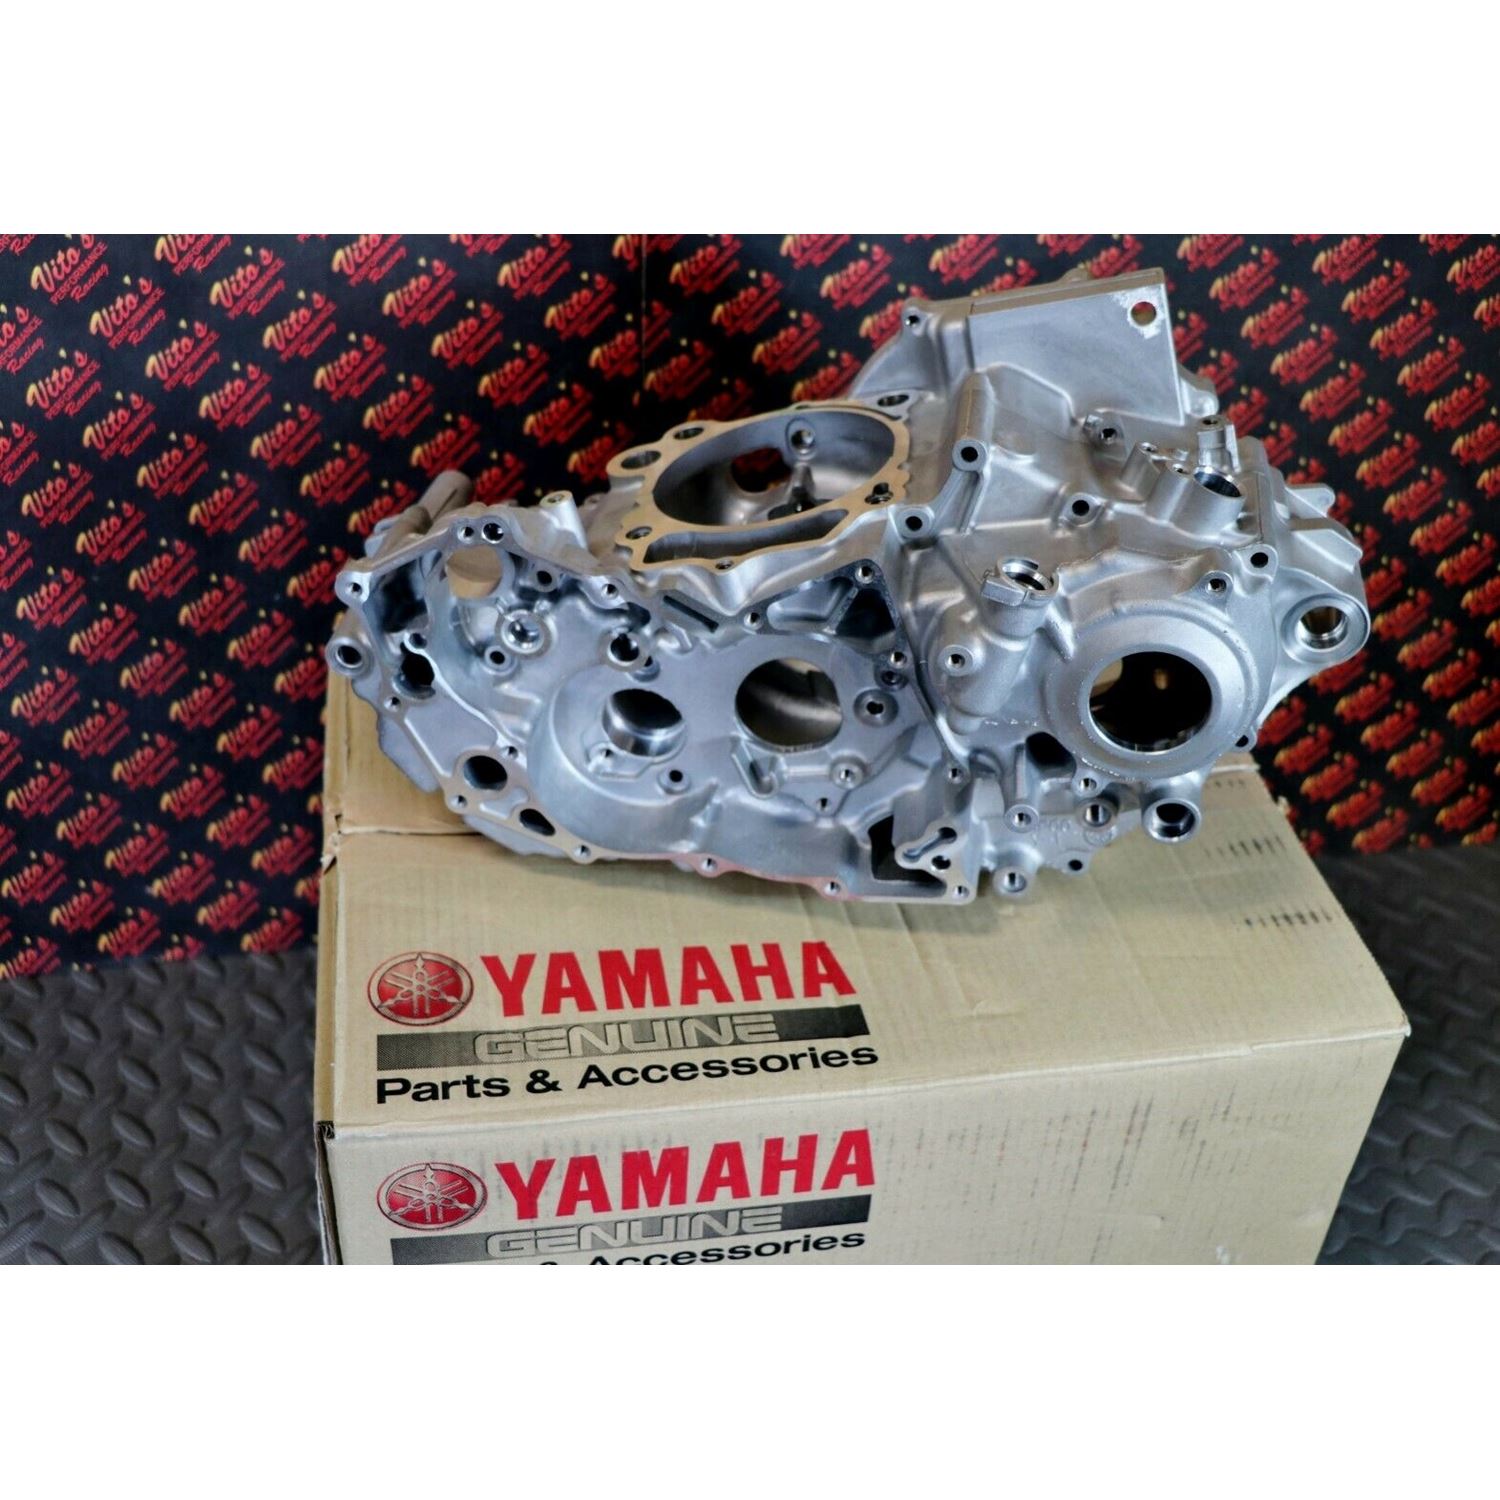 NEW Yamaha Engine Left Right Center Cases Case YFZ